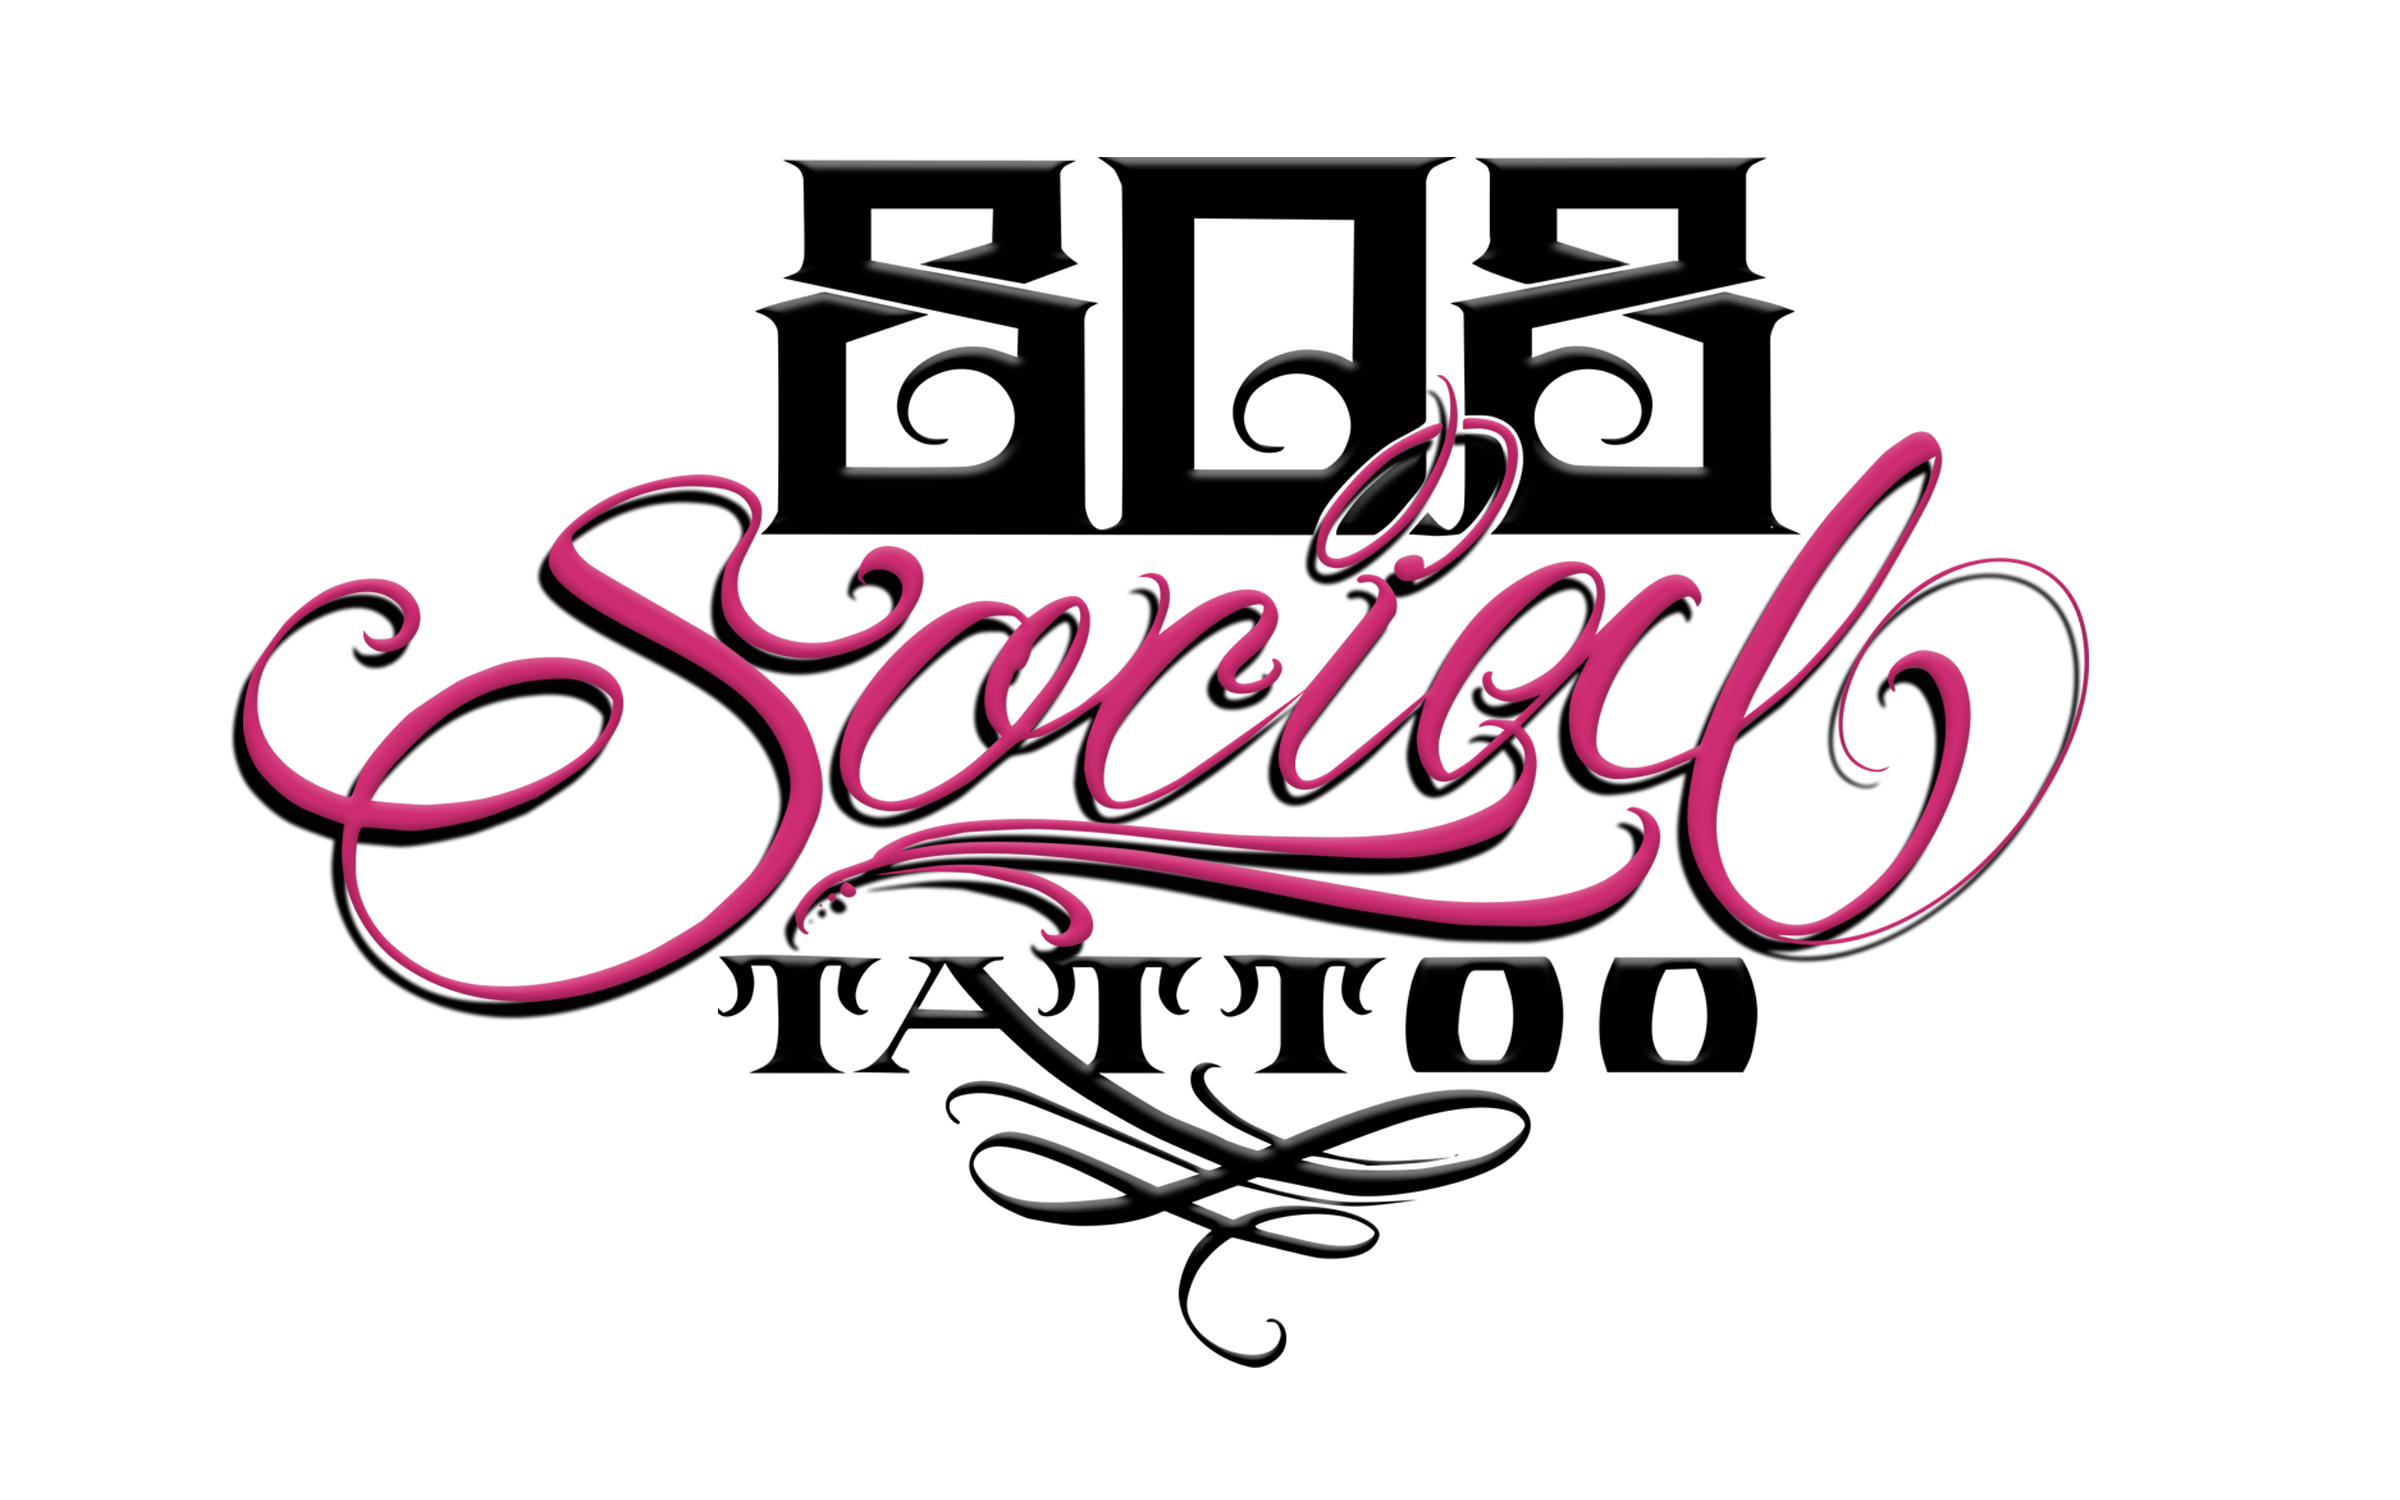 808 social az tattoo logo